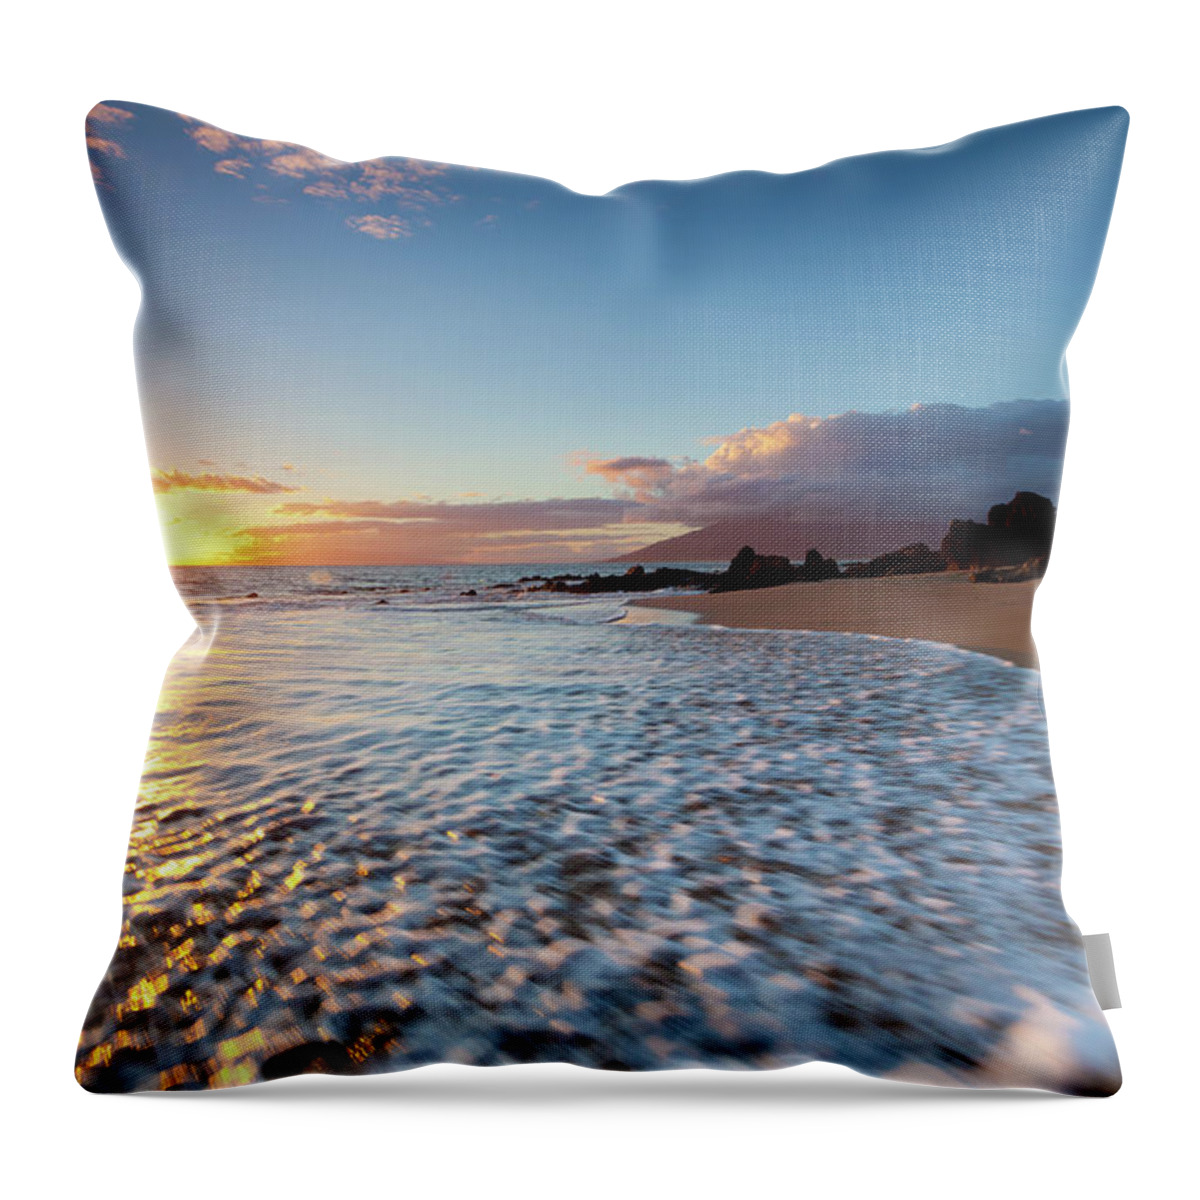 Water's Edge Throw Pillow featuring the photograph Idylic Maui Coastline - Hawaii, Kihei by Wingmar